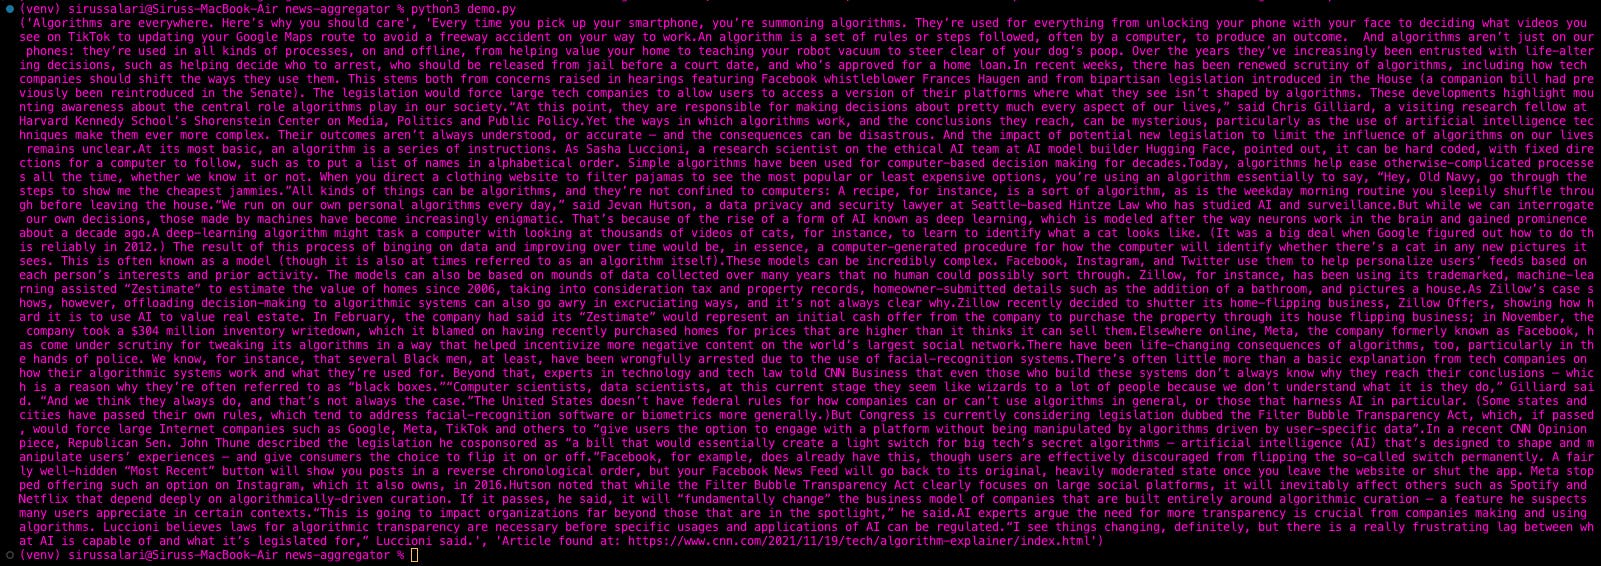 output of running python script